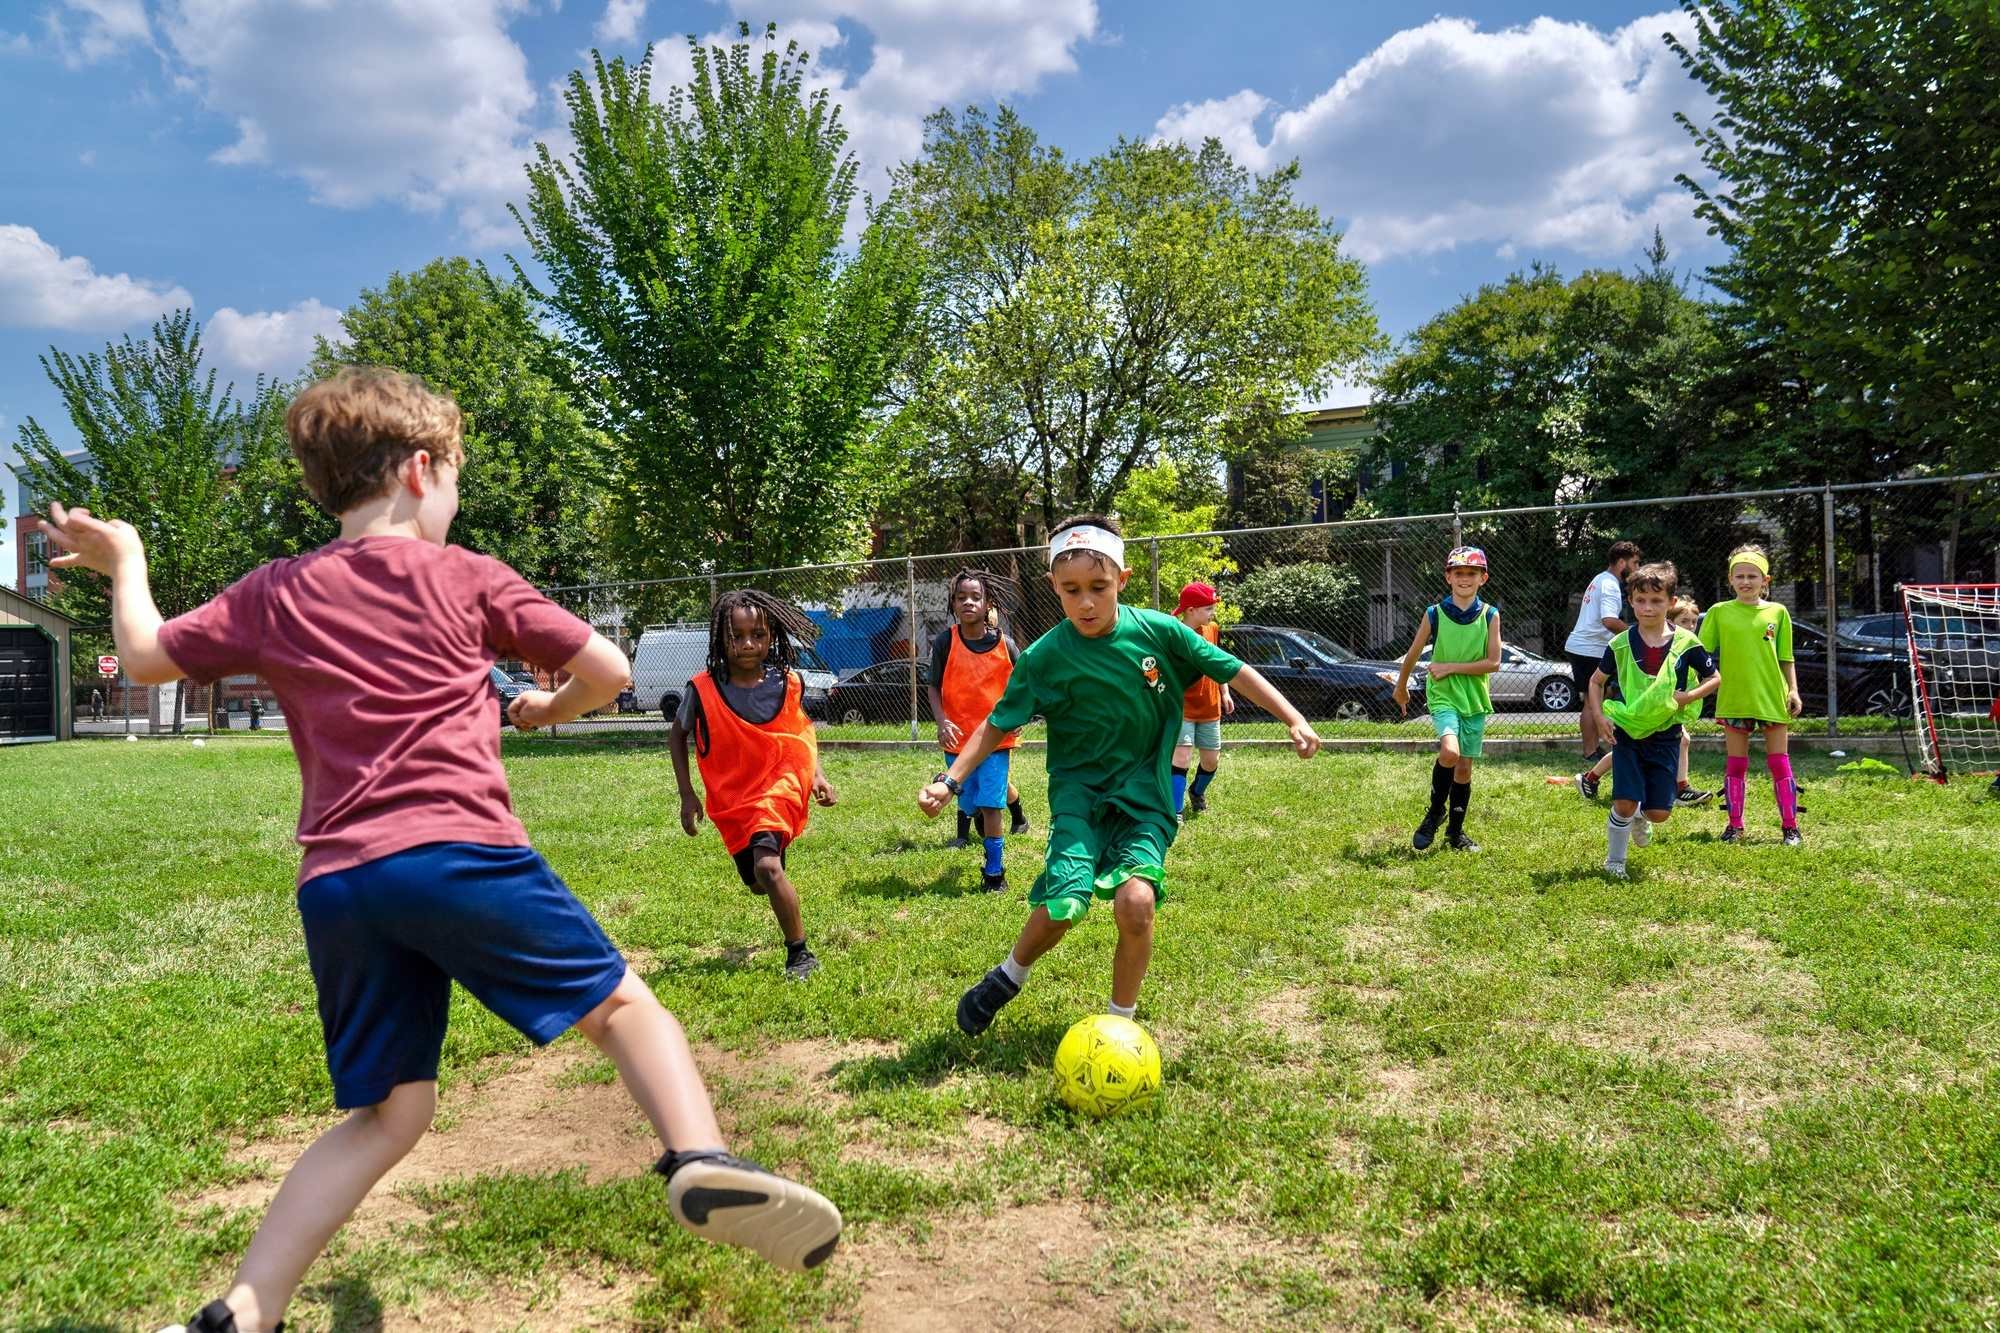 Dc-way-soccer-club-for-kids-in-washington-dc-summer-camp-at-tyler-elementary-school- 0068.jpg